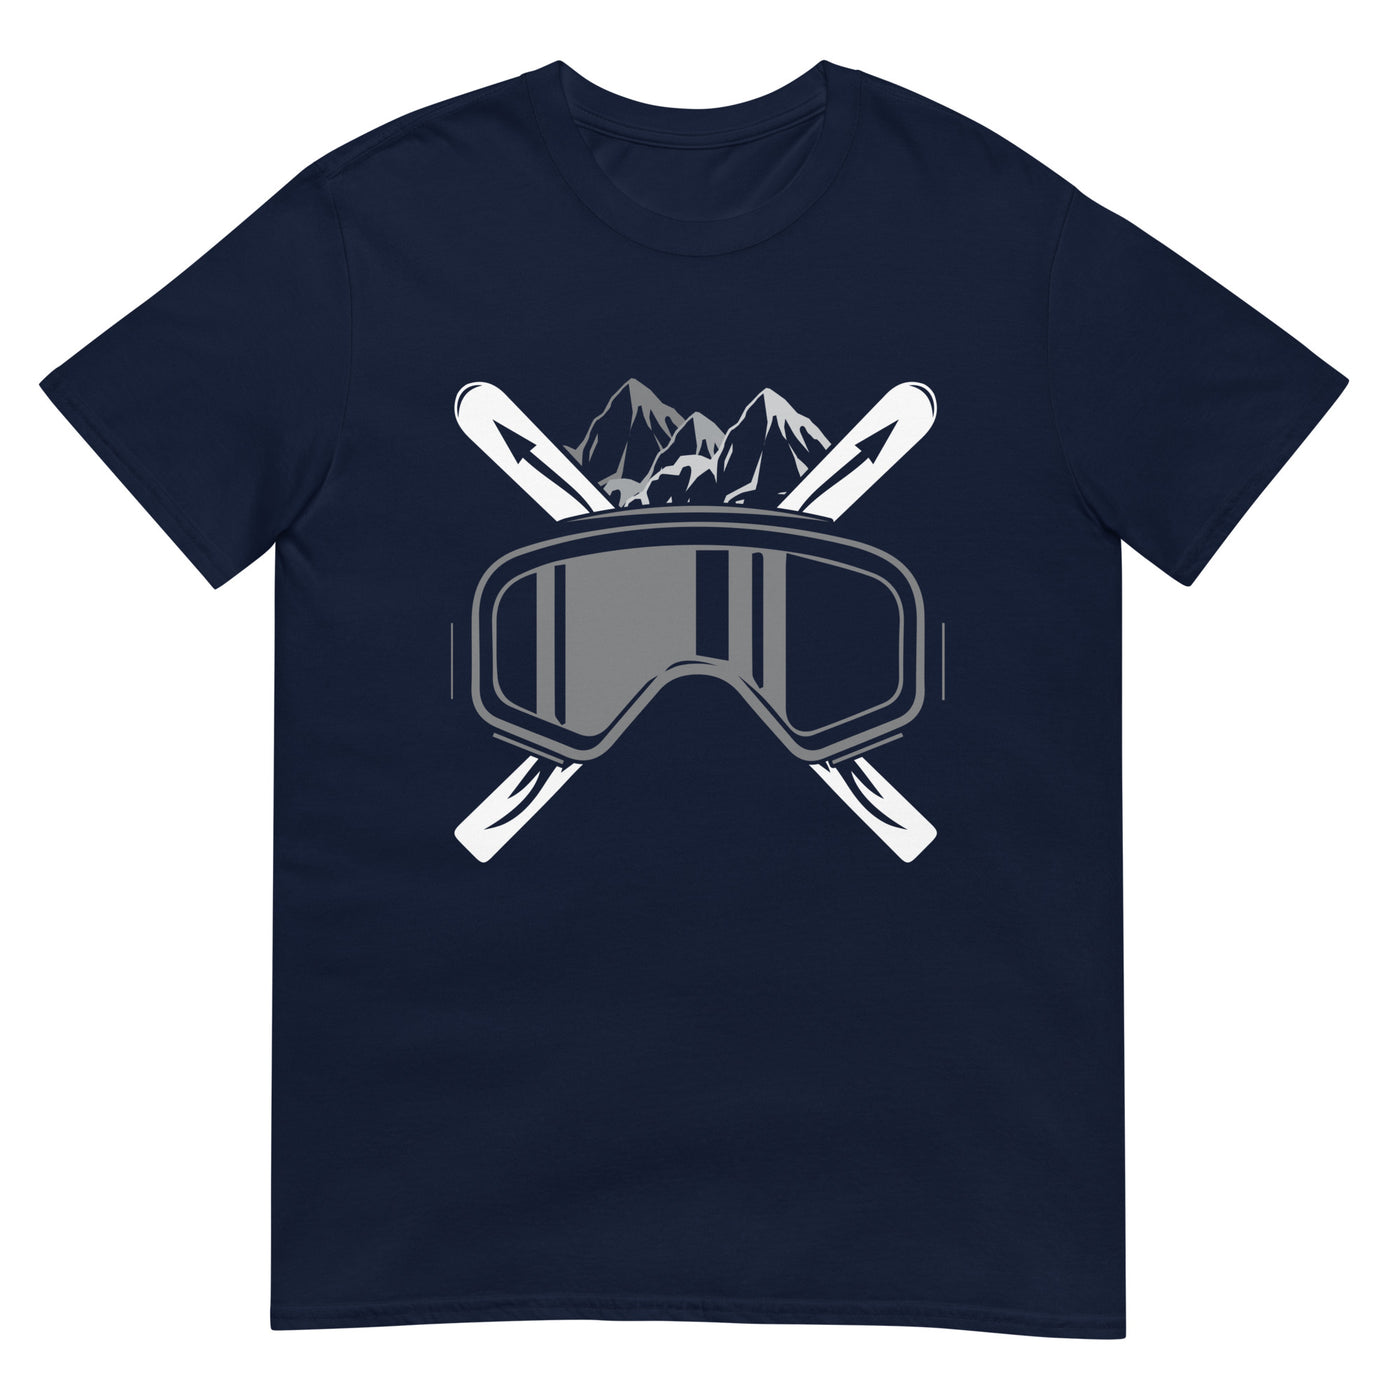 Schifoan - T-Shirt (Unisex) klettern ski xxx yyy zzz Navy